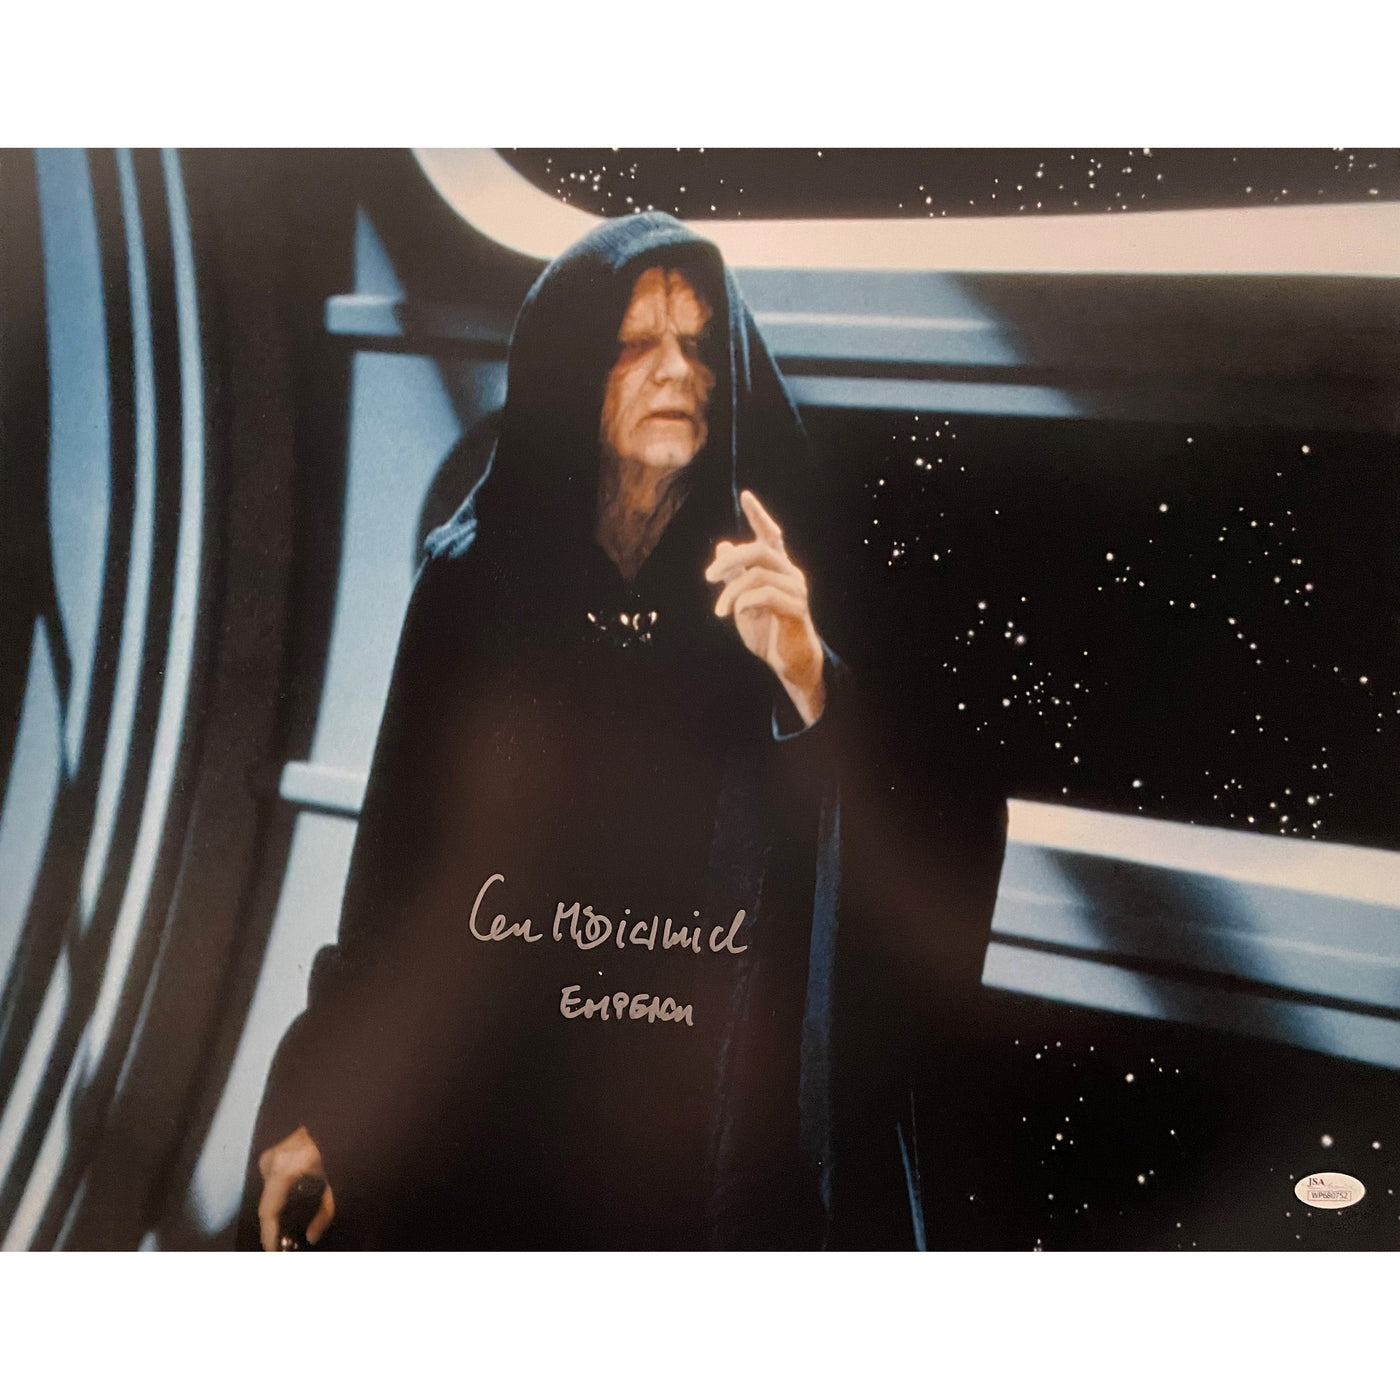 Ian Mcdiarmid Signed 16x20 Photo Star Wars Emperor Autographed JSA COA 8